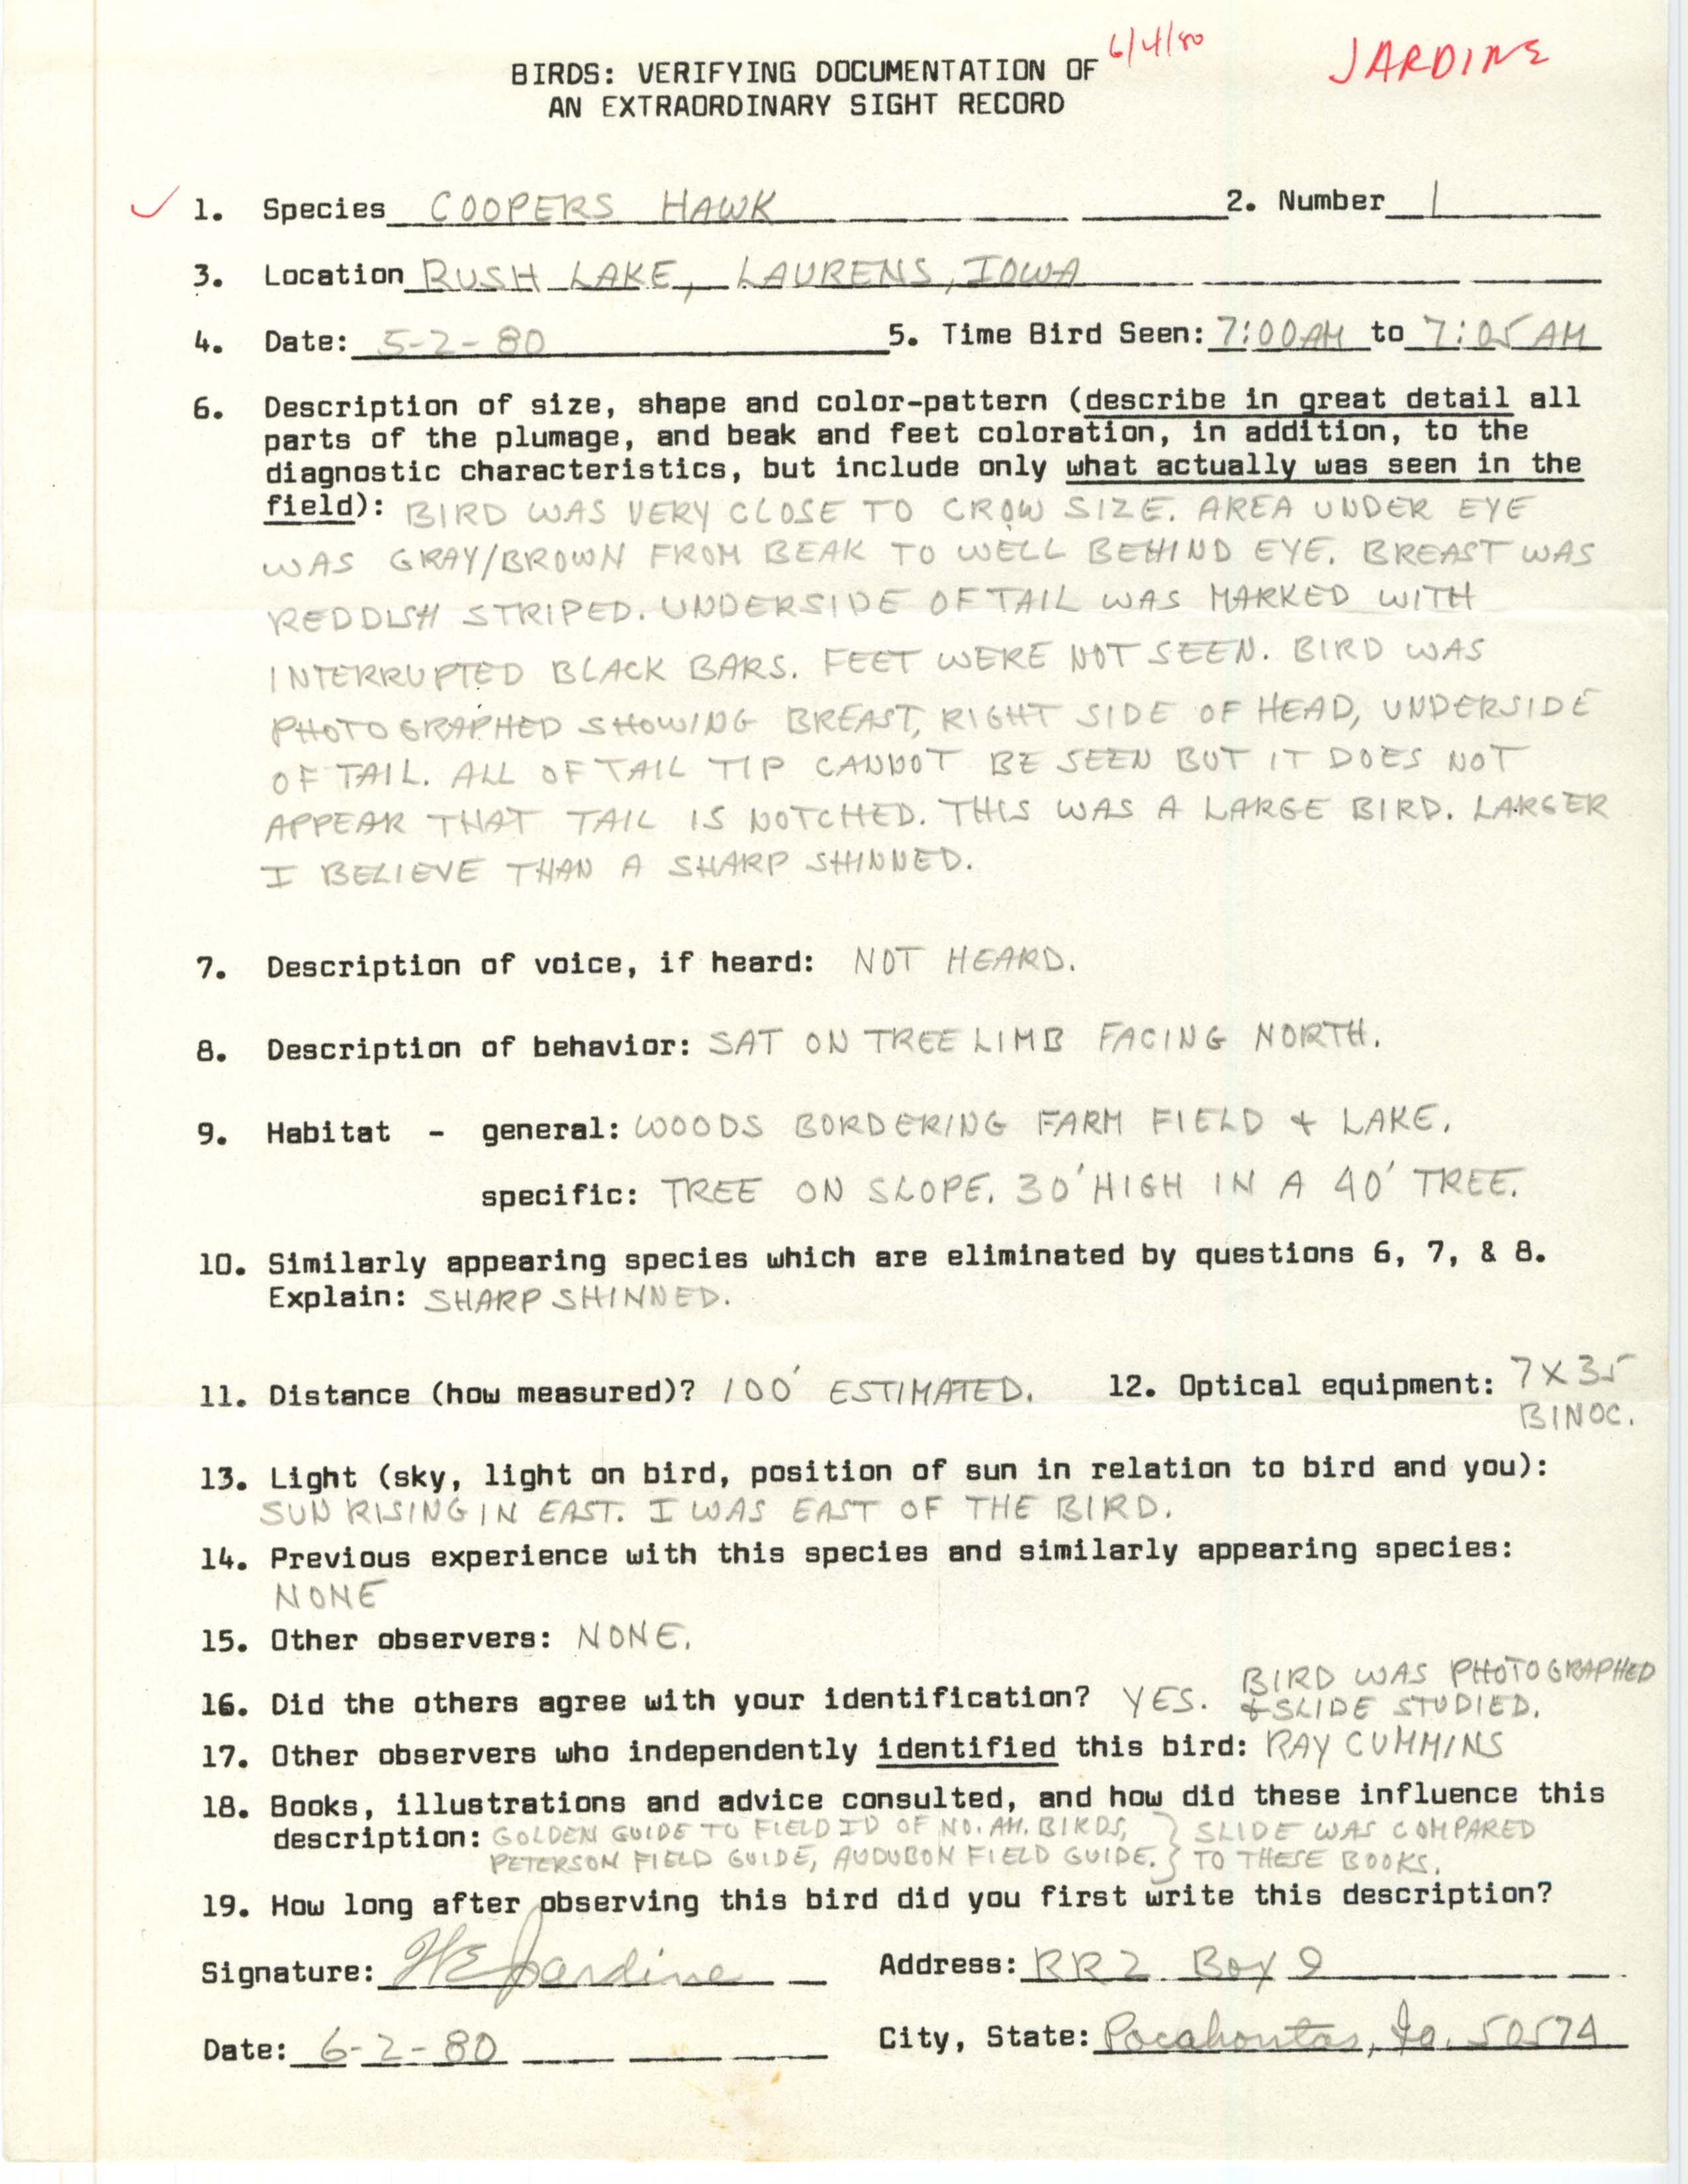 Rare bird documentation form for Cooper's Hawk at Rush Lake, 1980